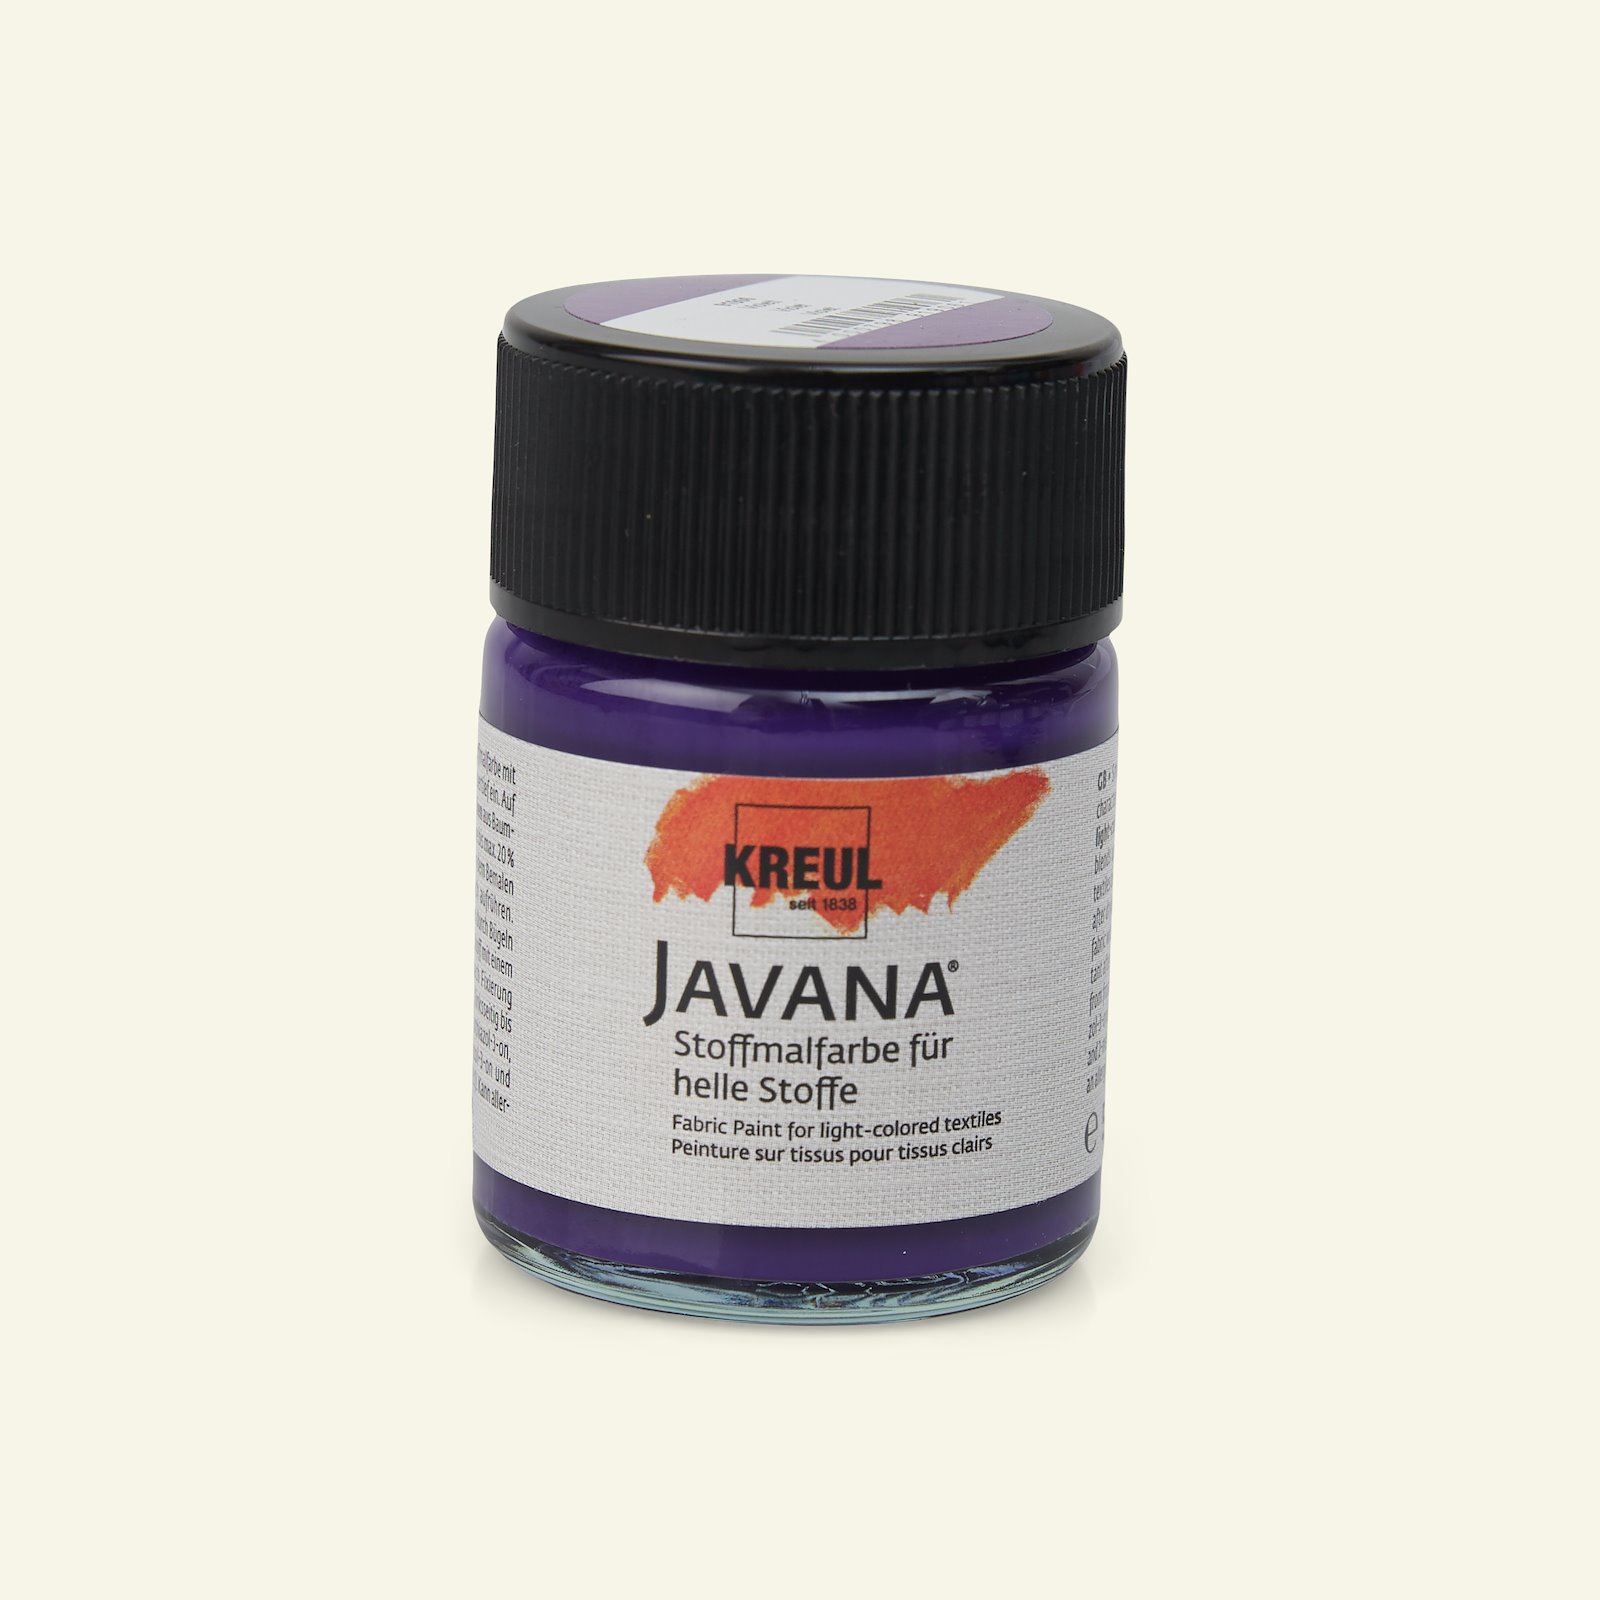 Javana tekstilfarge, lilla, 50ml 29610_pack_b